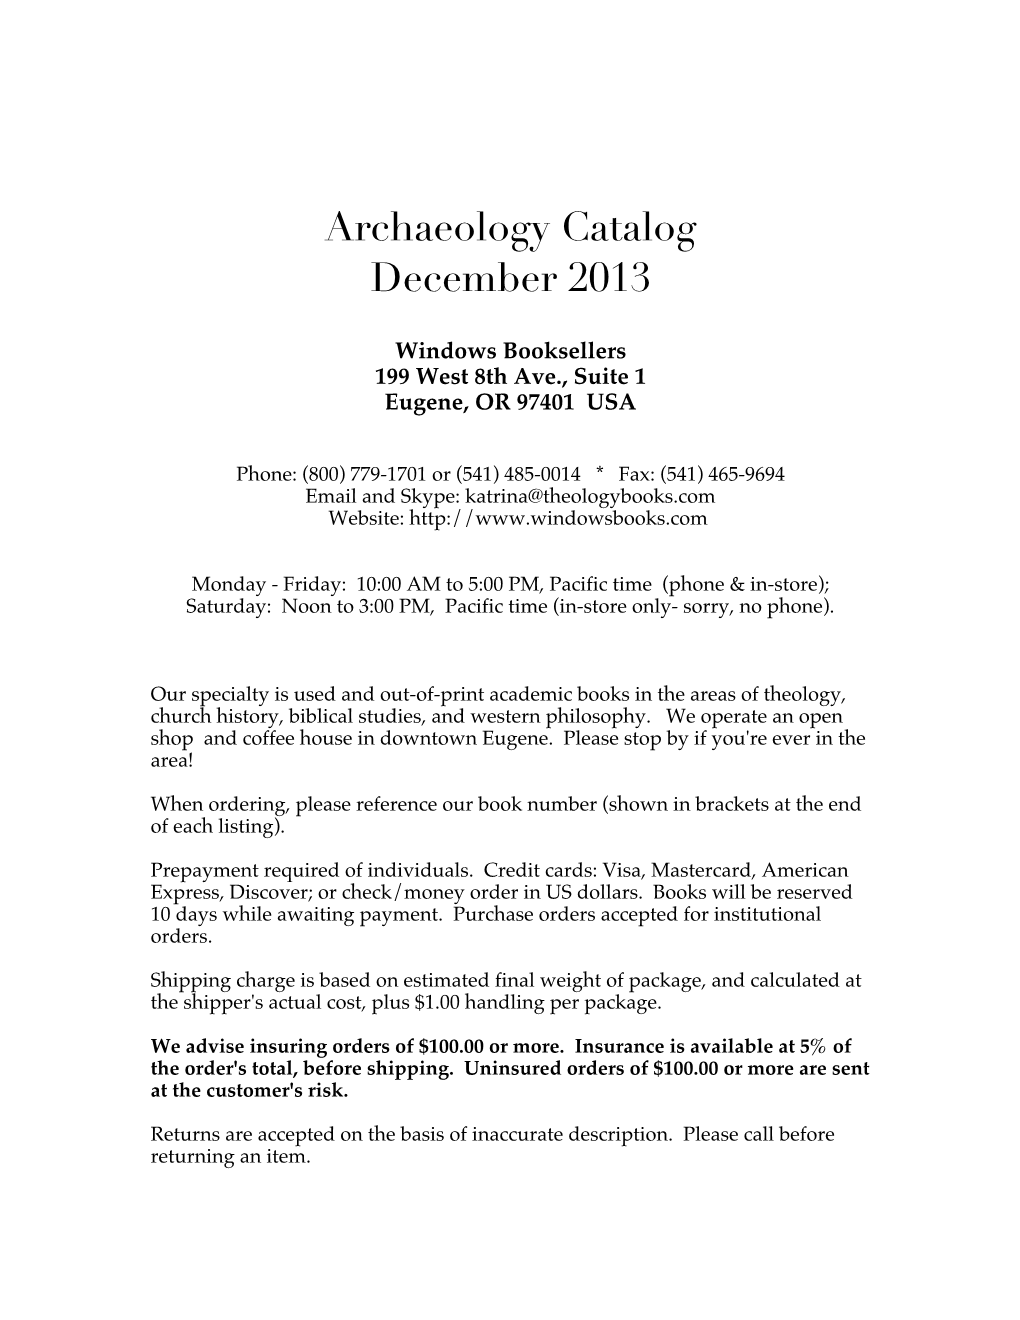 Archaeology Catalog December 2013